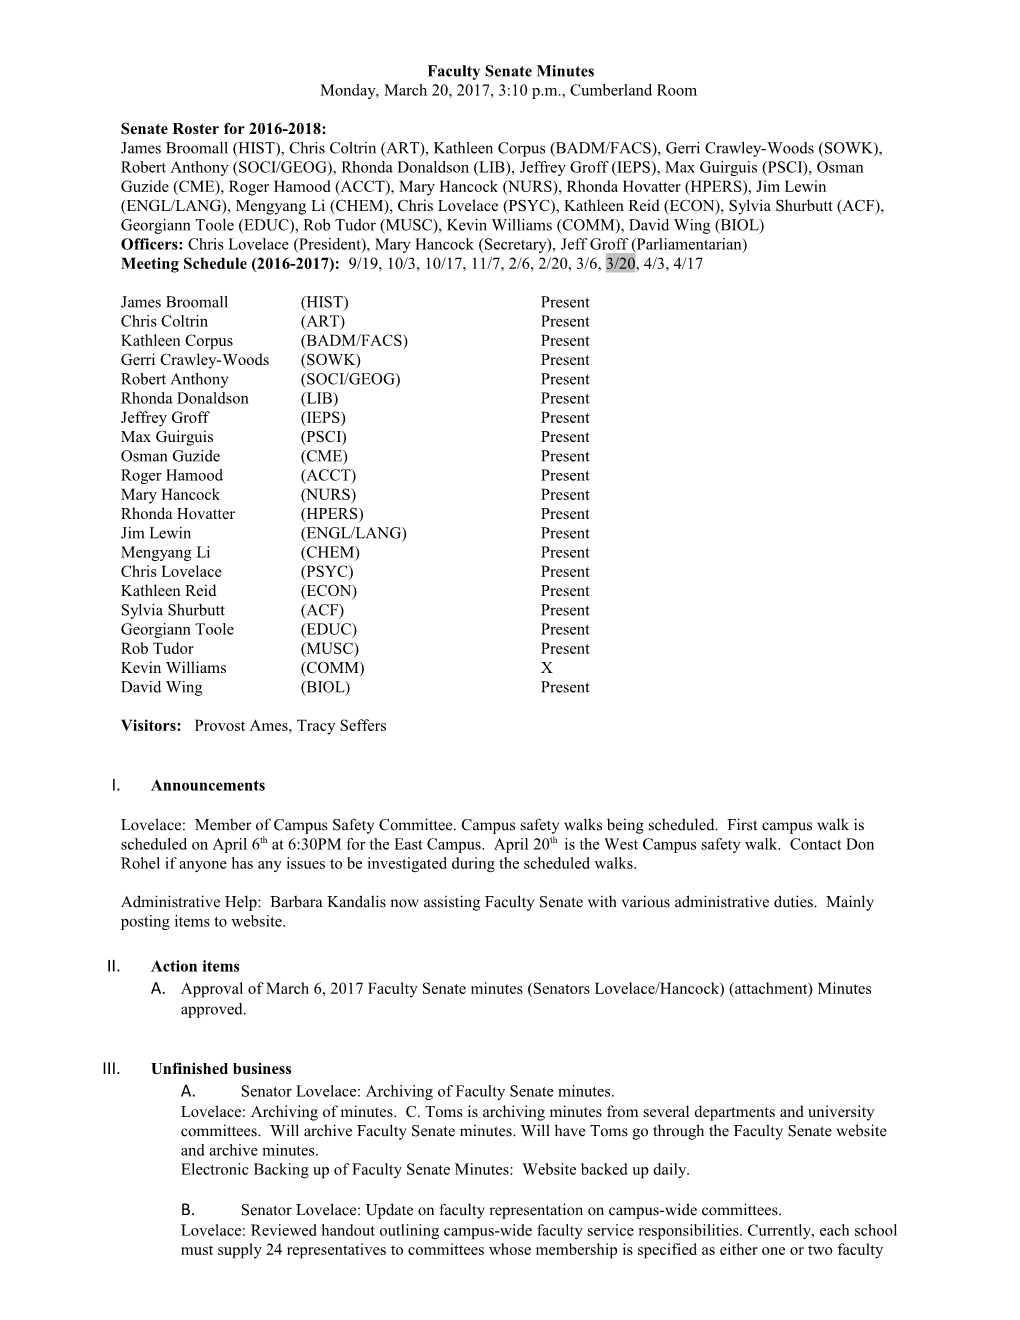 Faculty Senate Agenda Page 2 of 5